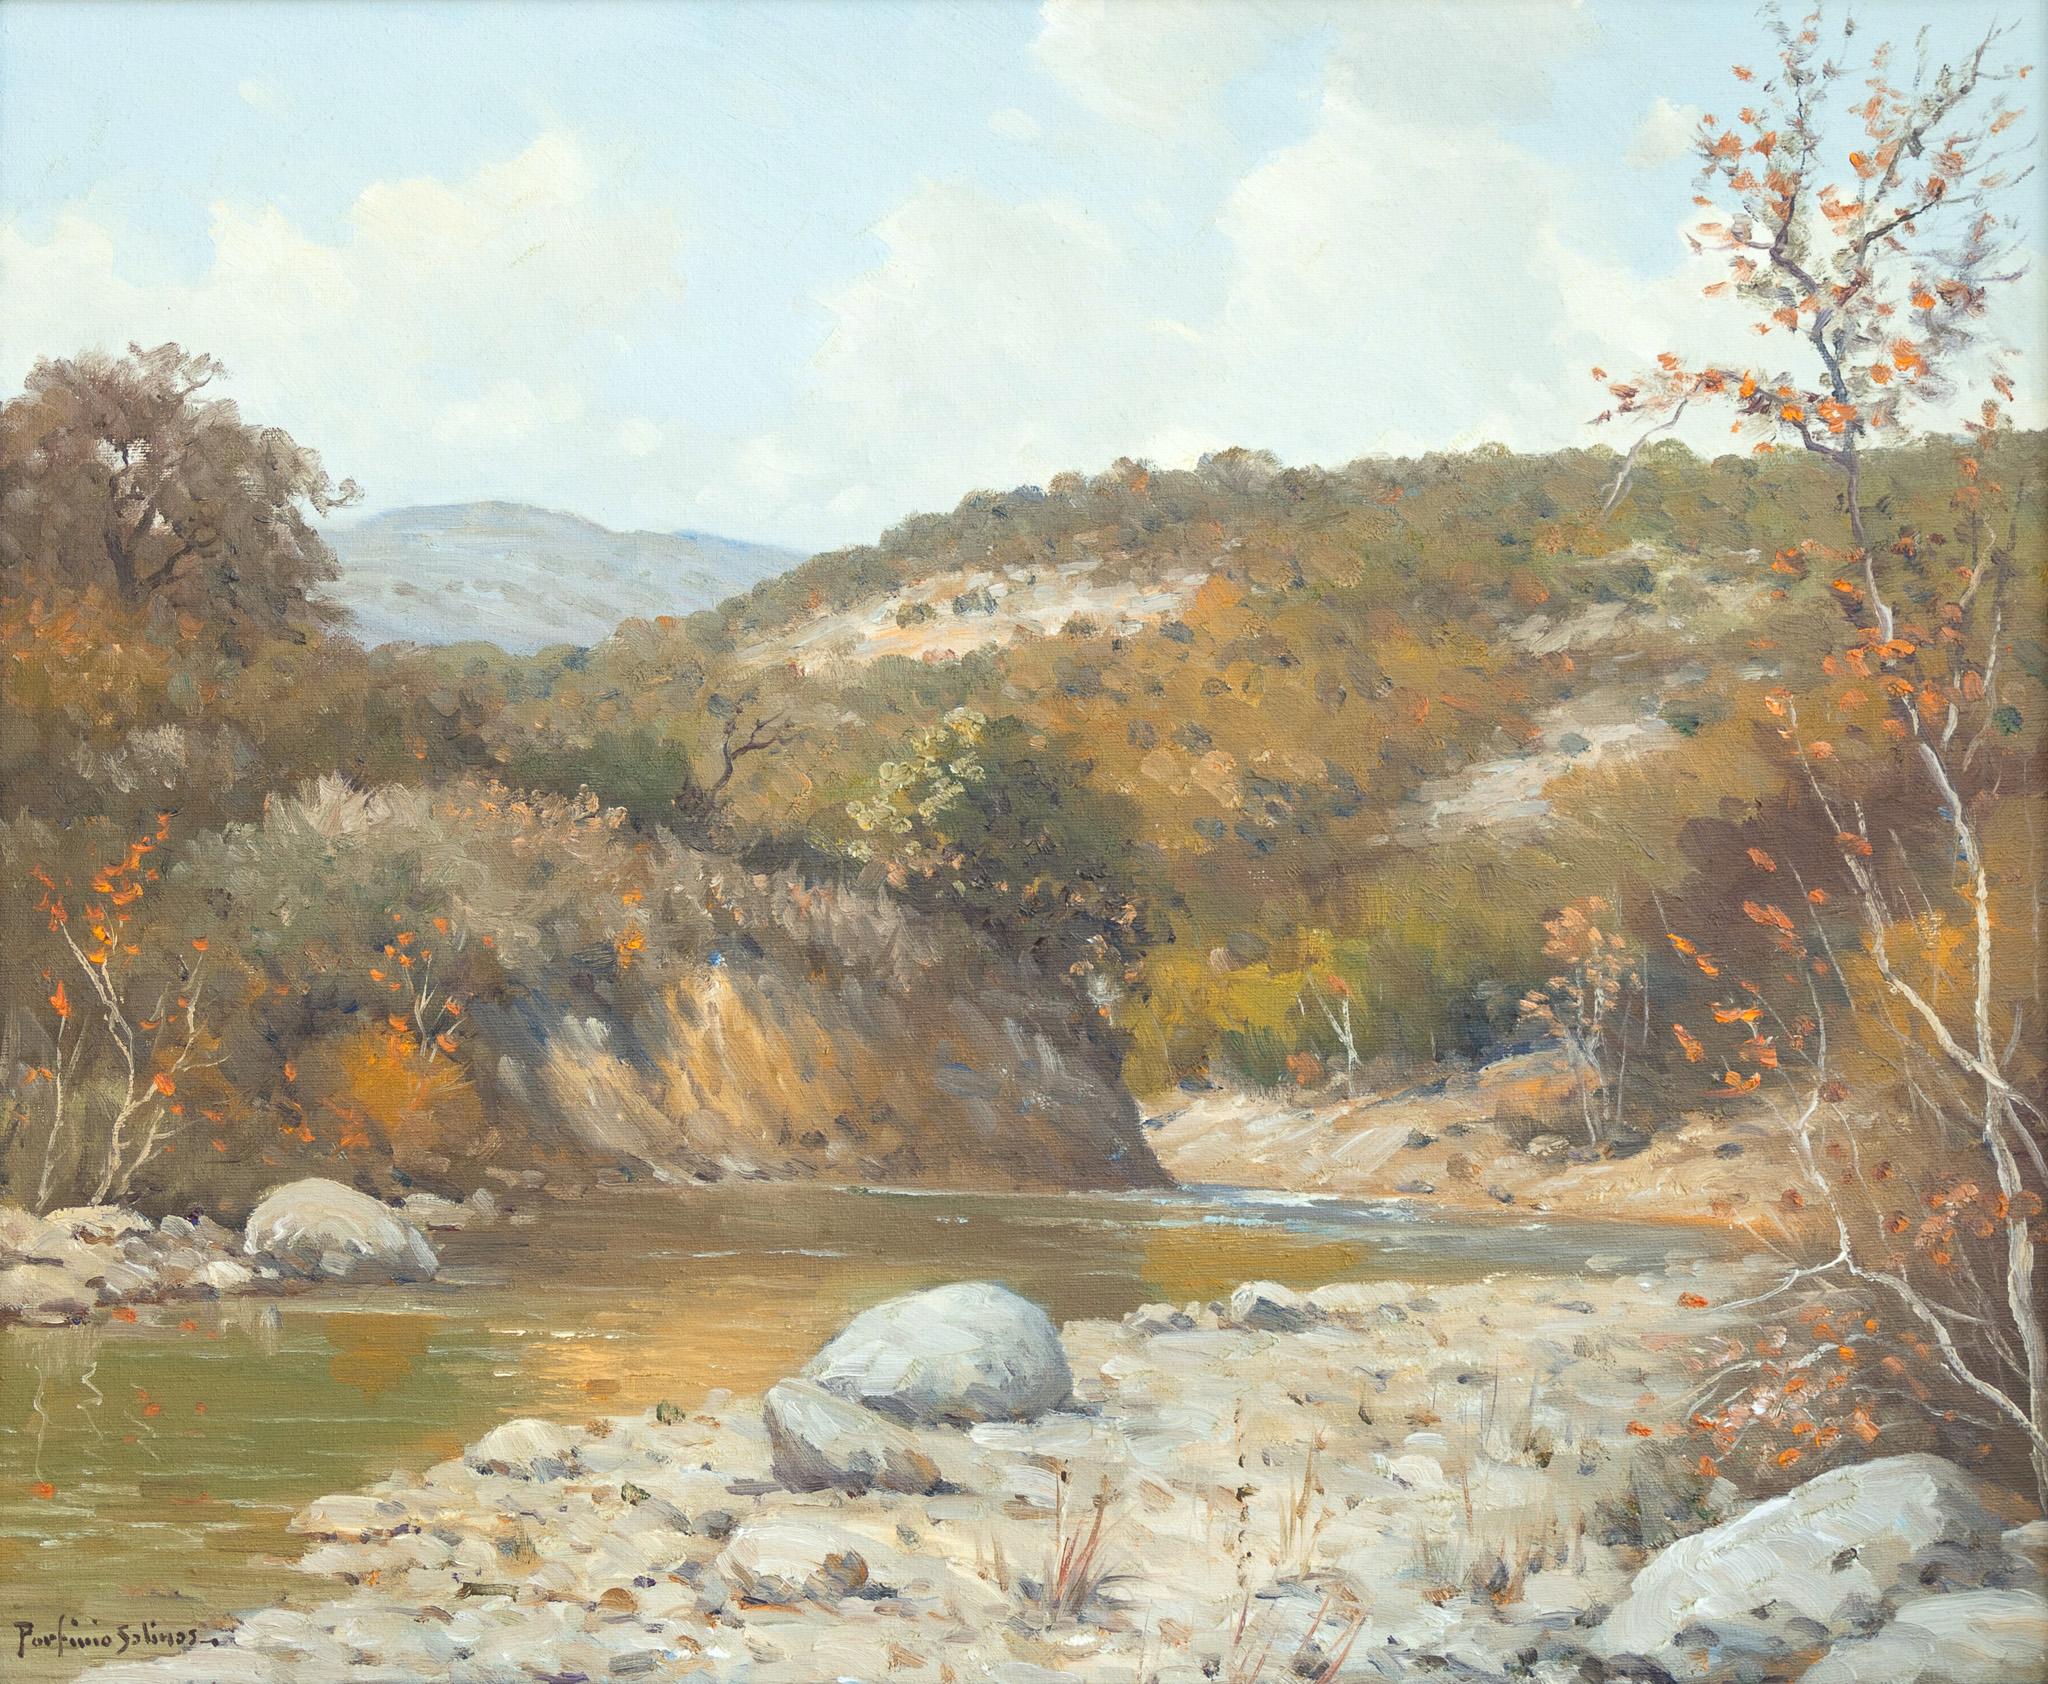 Porfirio Salinas Landscape Painting - "River Landscape" Fall Texas Hill Country Landscape